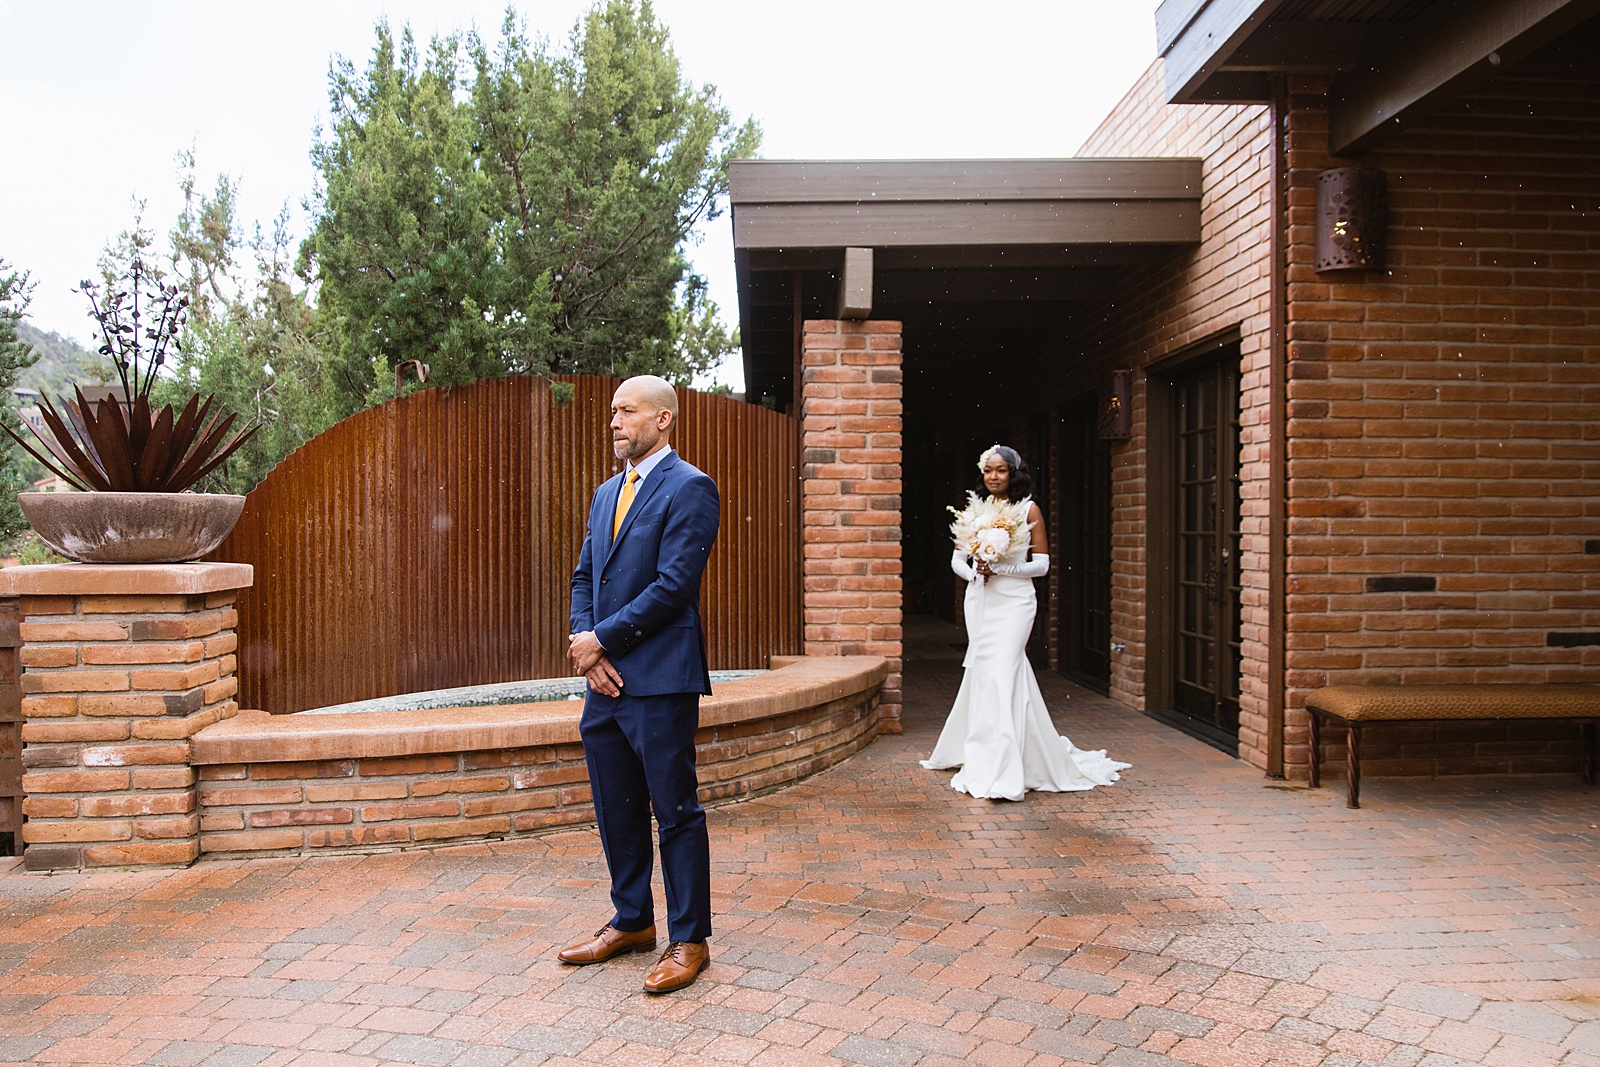 Newlyweds's first look at Agave of Sedona by Arizona wedding photographer PMA Photography.